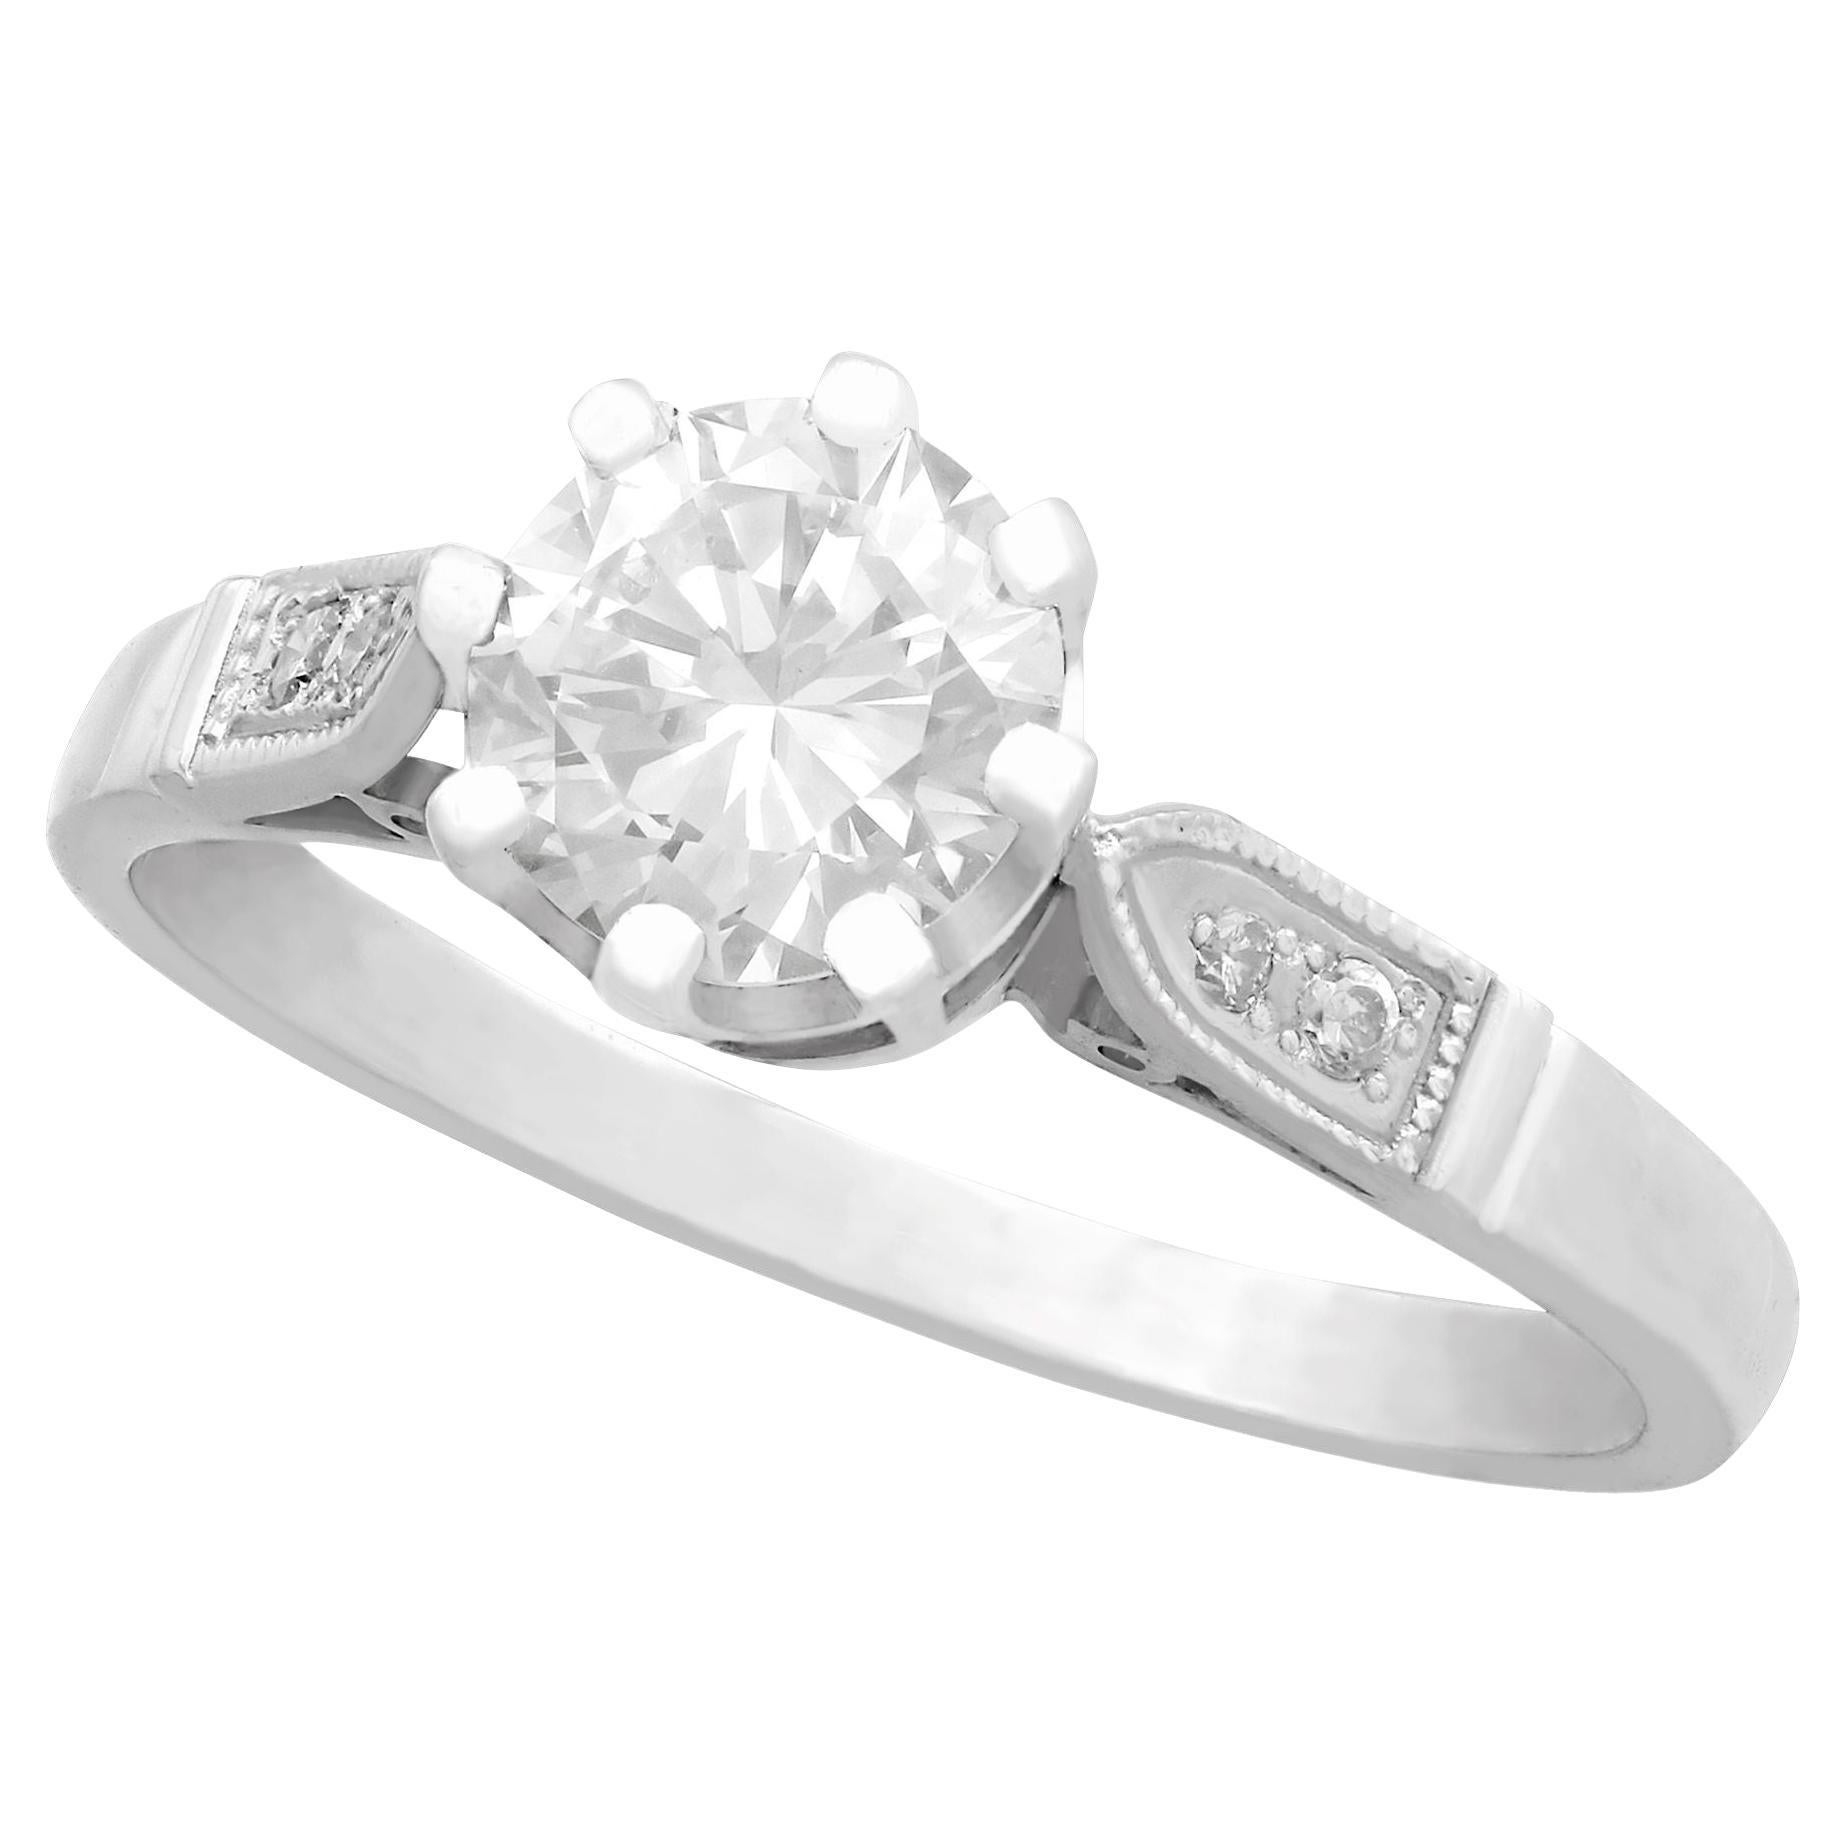 1940s 1.04 Carat Diamond and Platinum Solitaire Engagement Ring